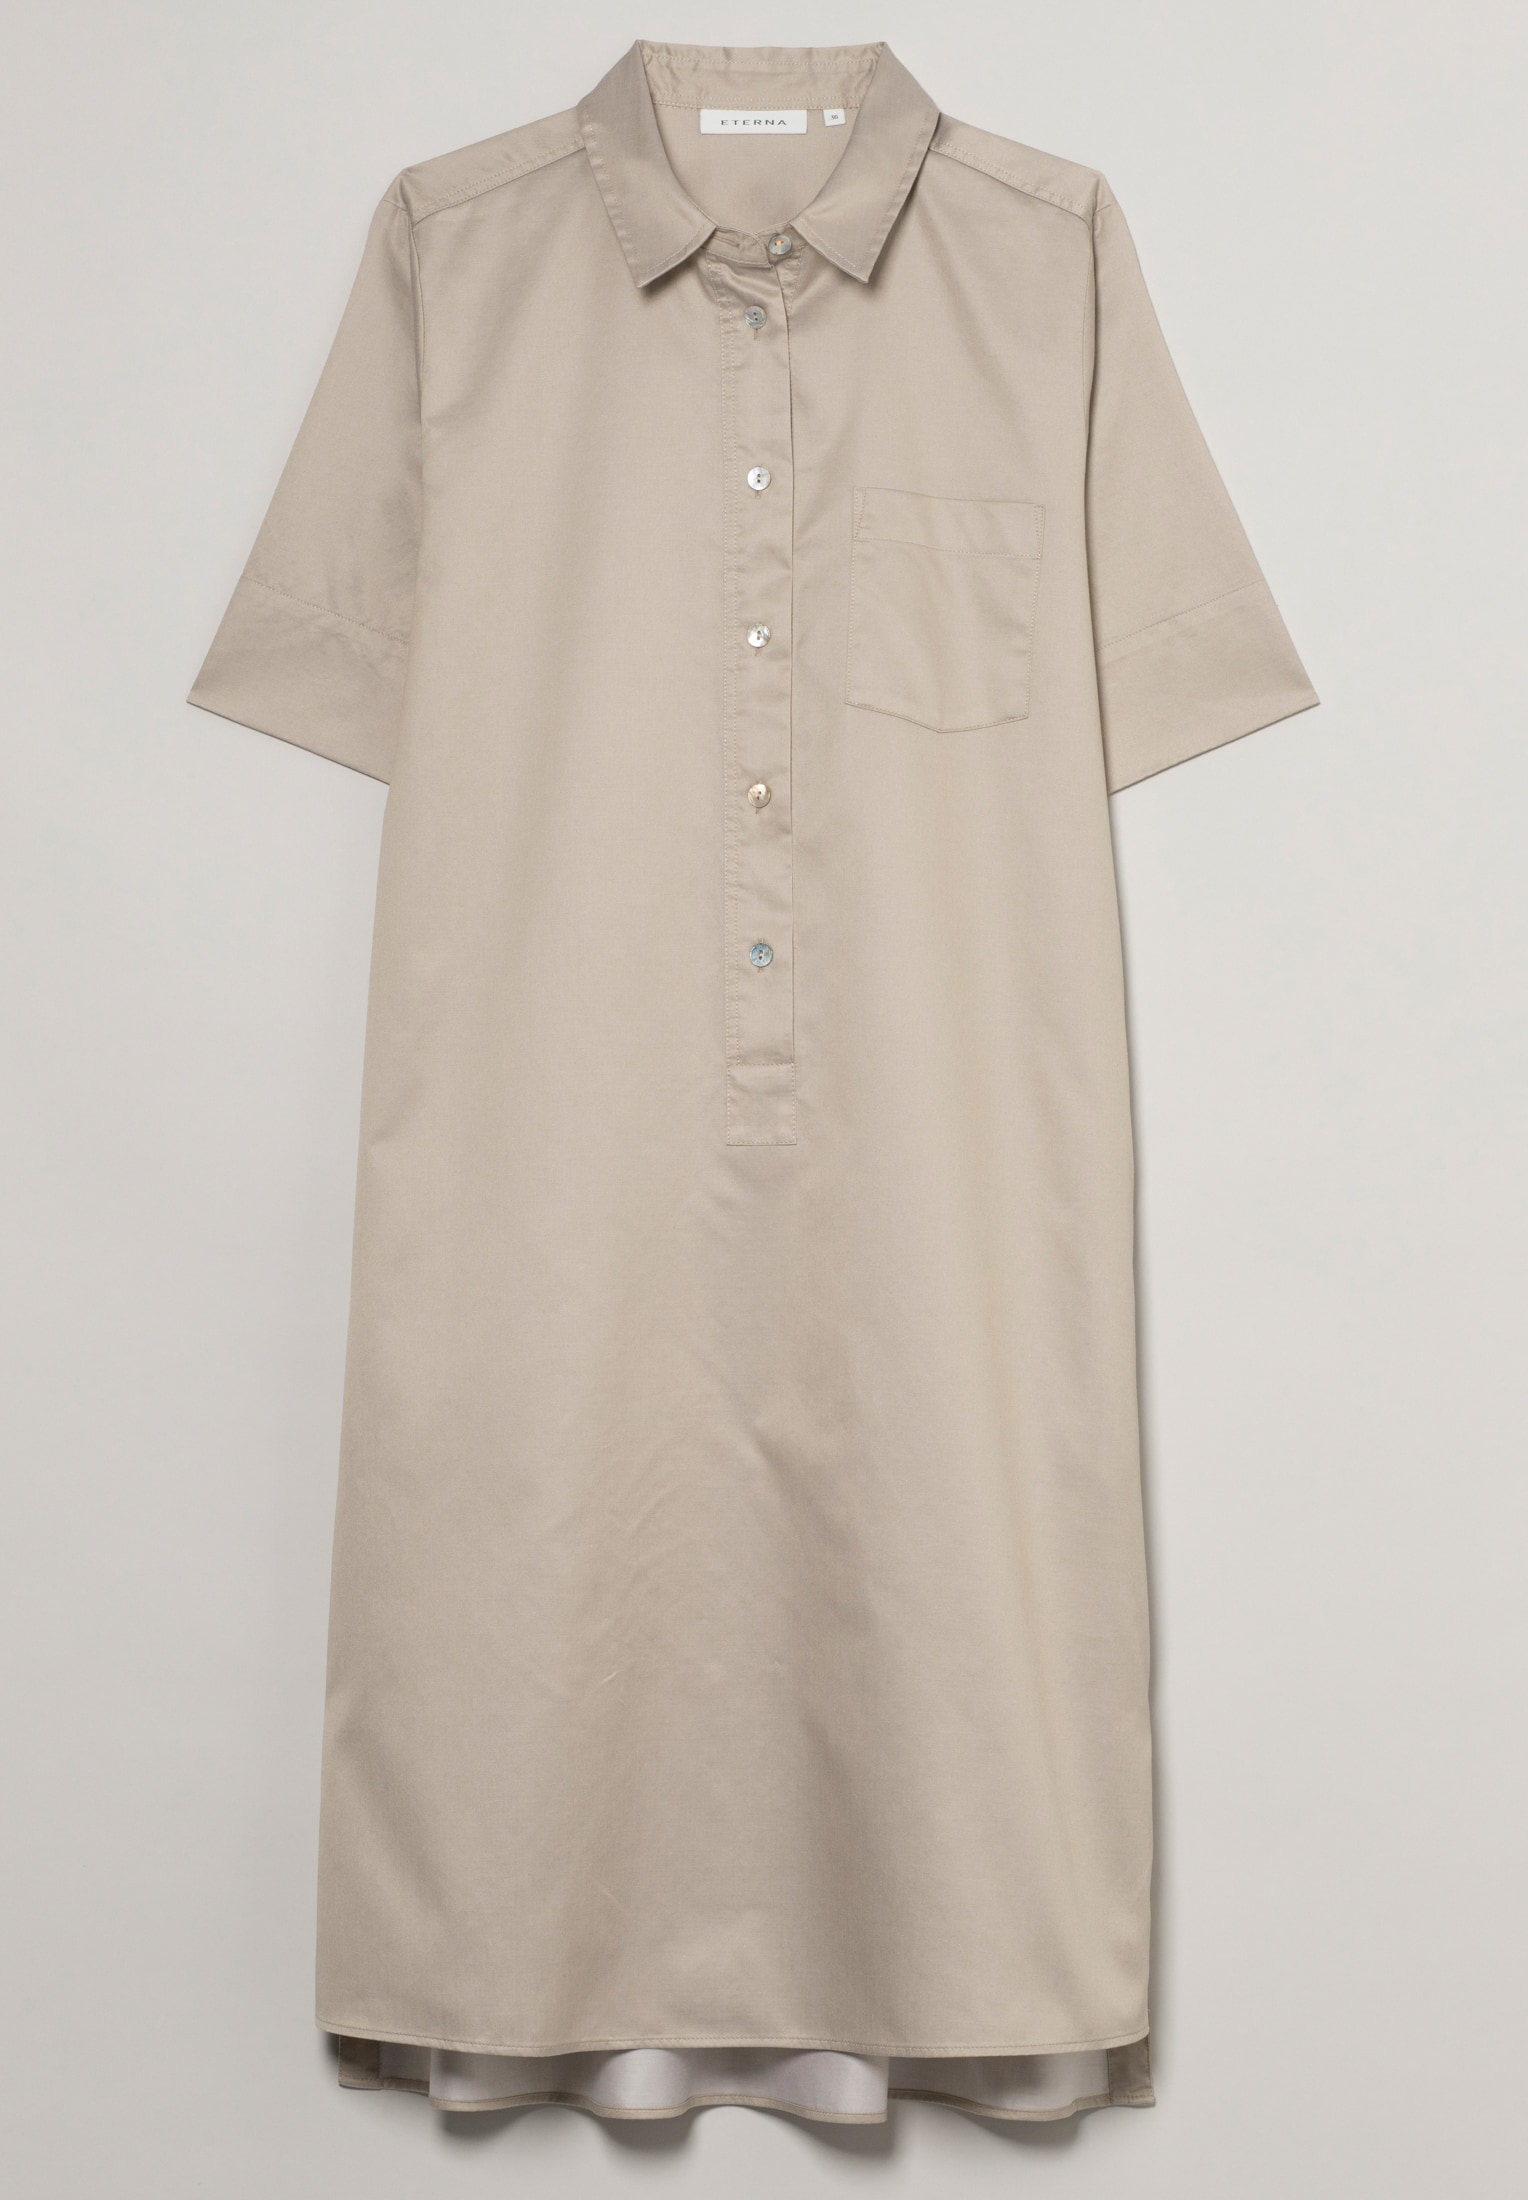 2DR00234-04-01-42-1/2 42 | Bluse grün Soft Shirt | unifarben grün | Kurzarm | in Luxury